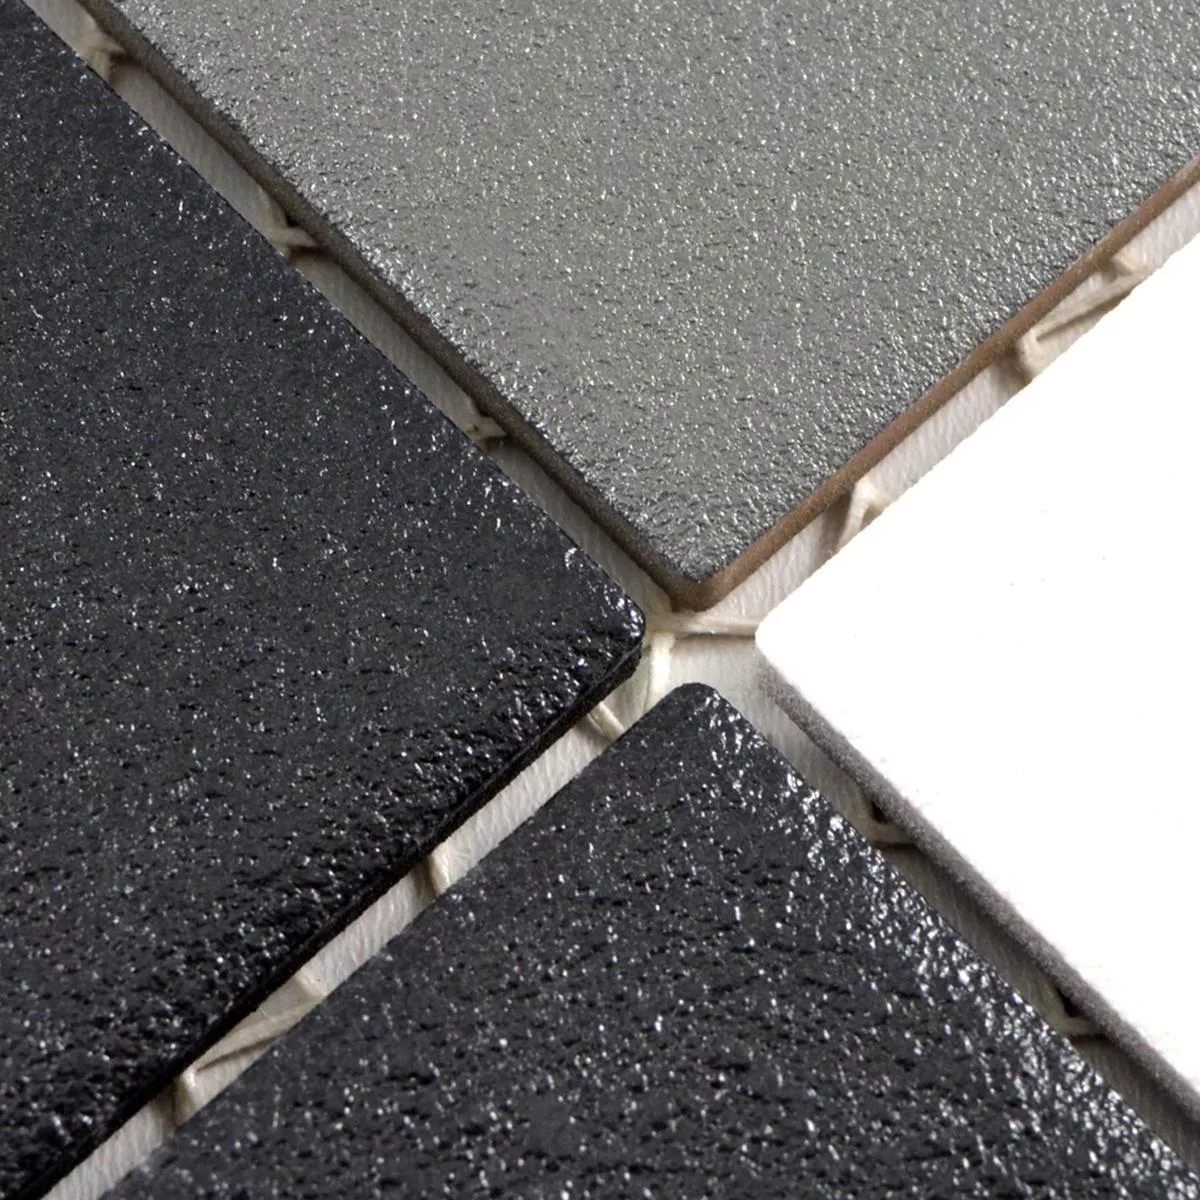 Sample Ceramic Mosaic Tiles Heinmot Black White Metal R10 Q48